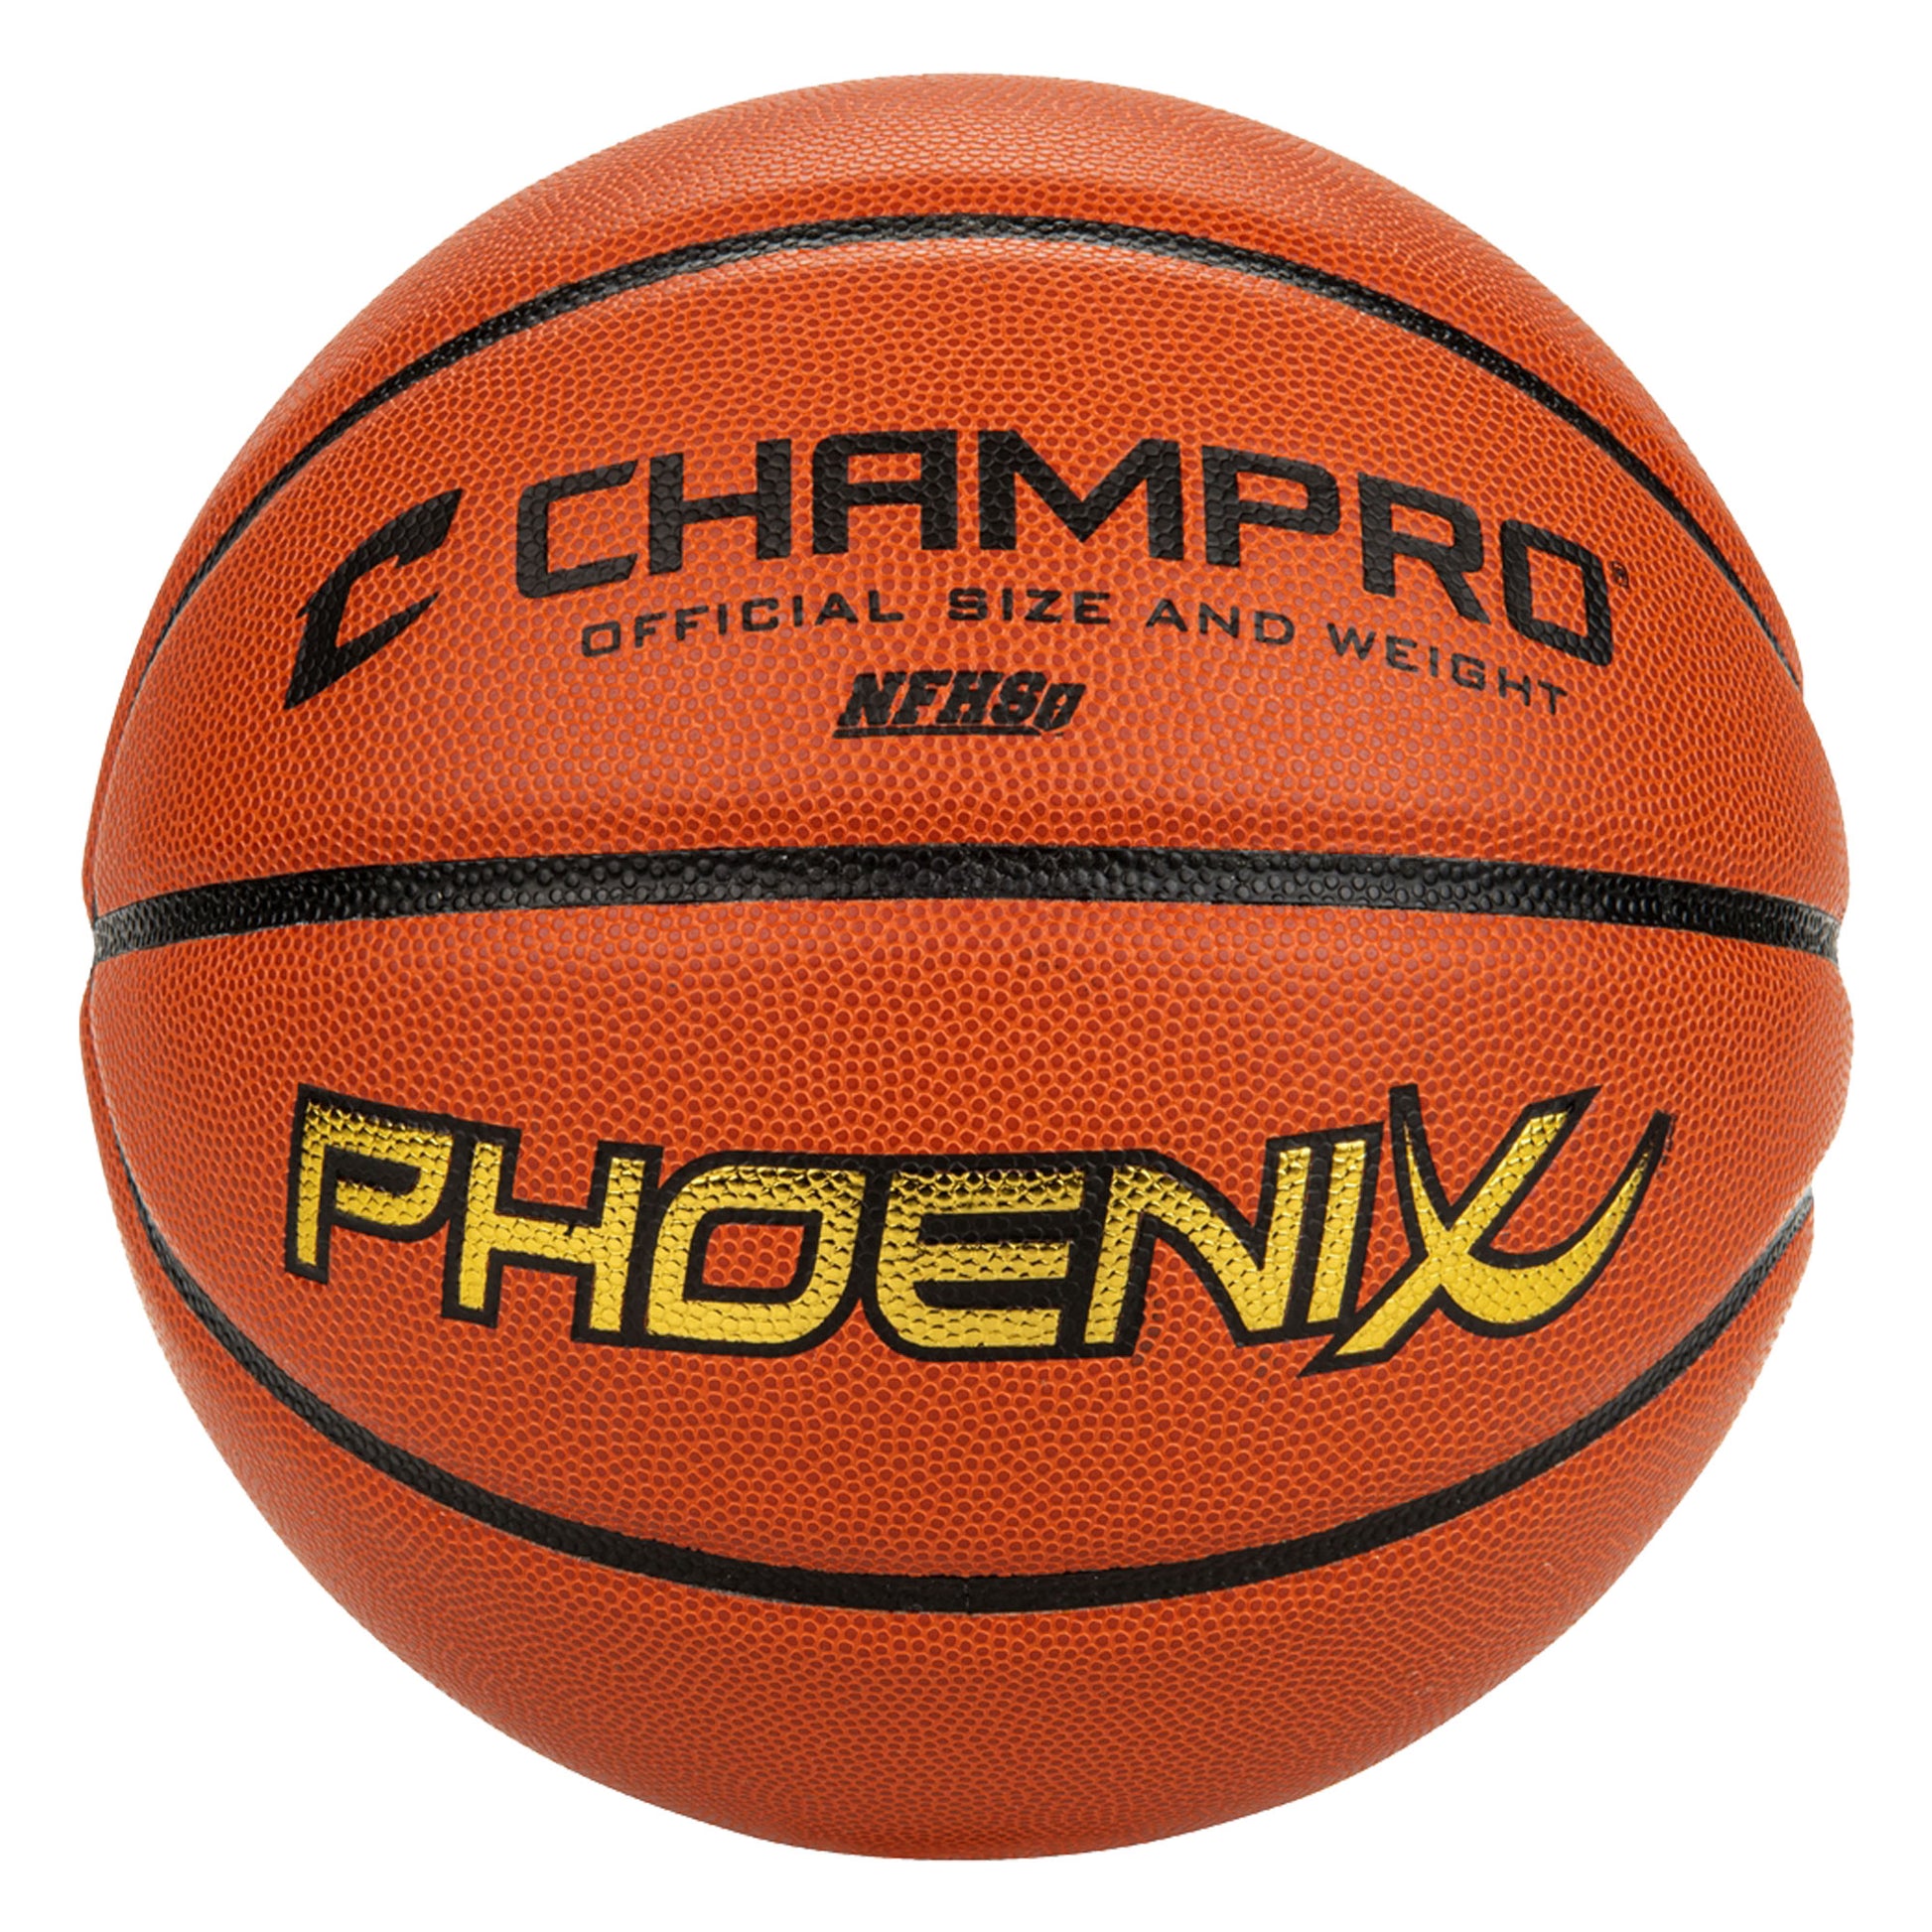 Champro Sports Phoenix Microfiber Indoor Basketball – Red's Team Sports